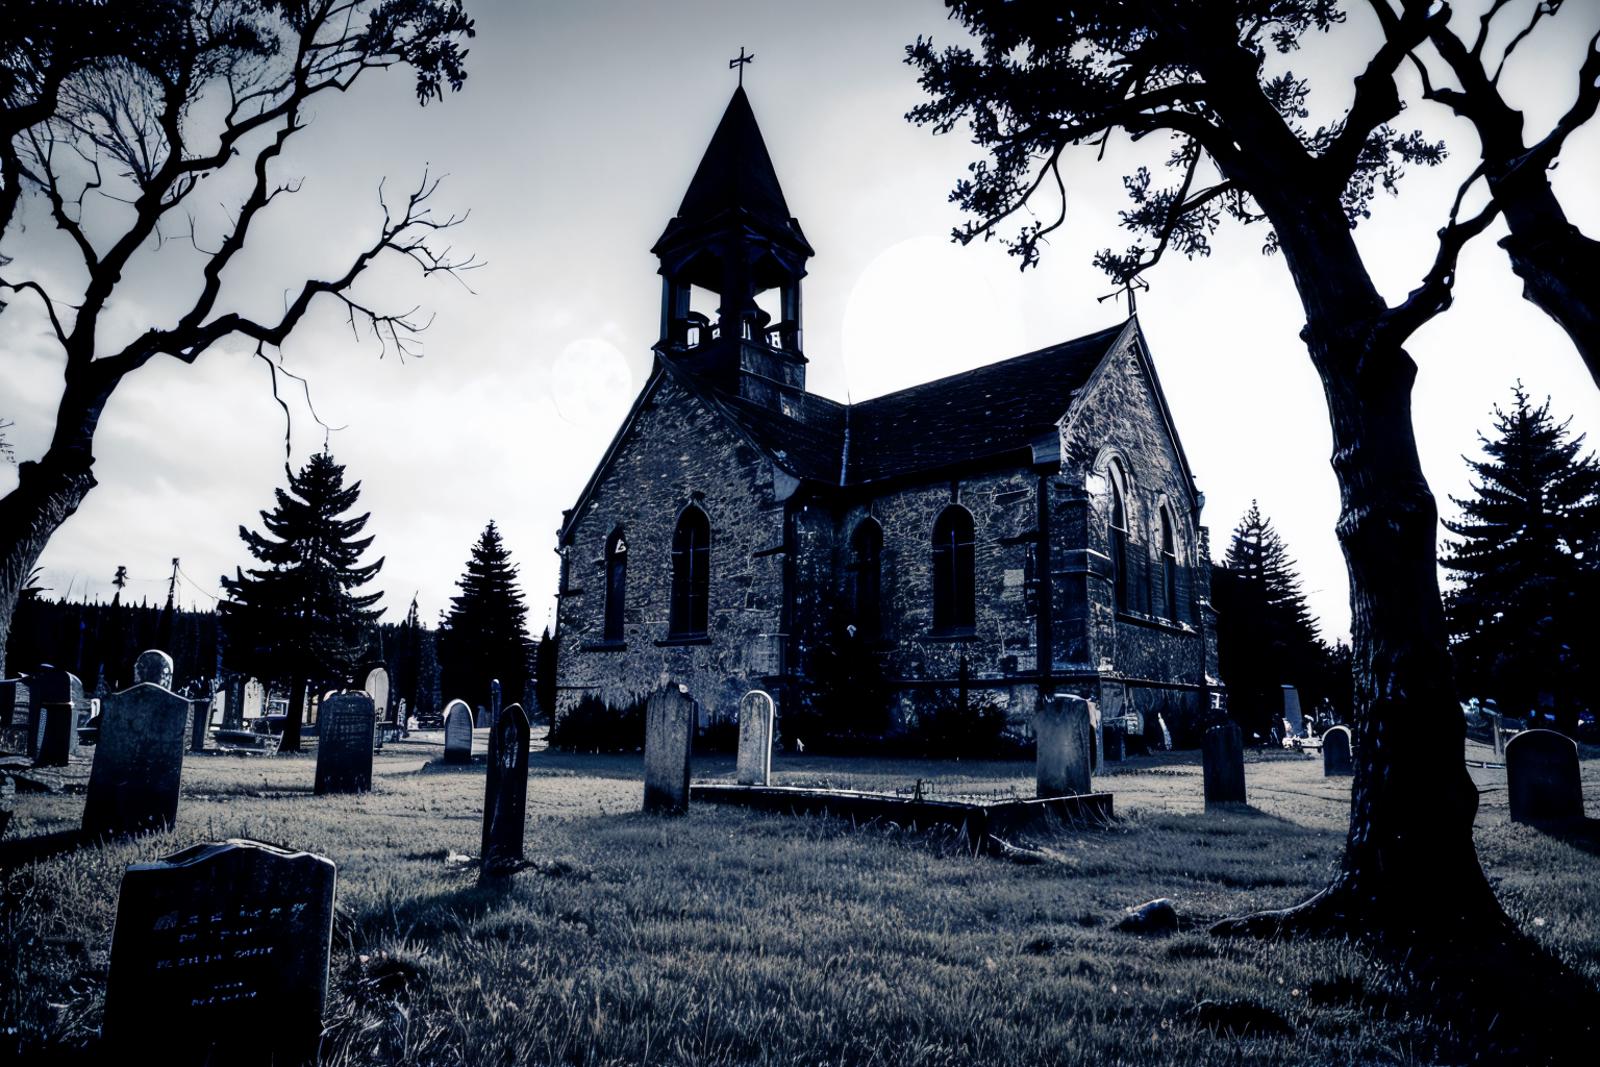 Edob Church Cemetery Creepy Night image by edobgames